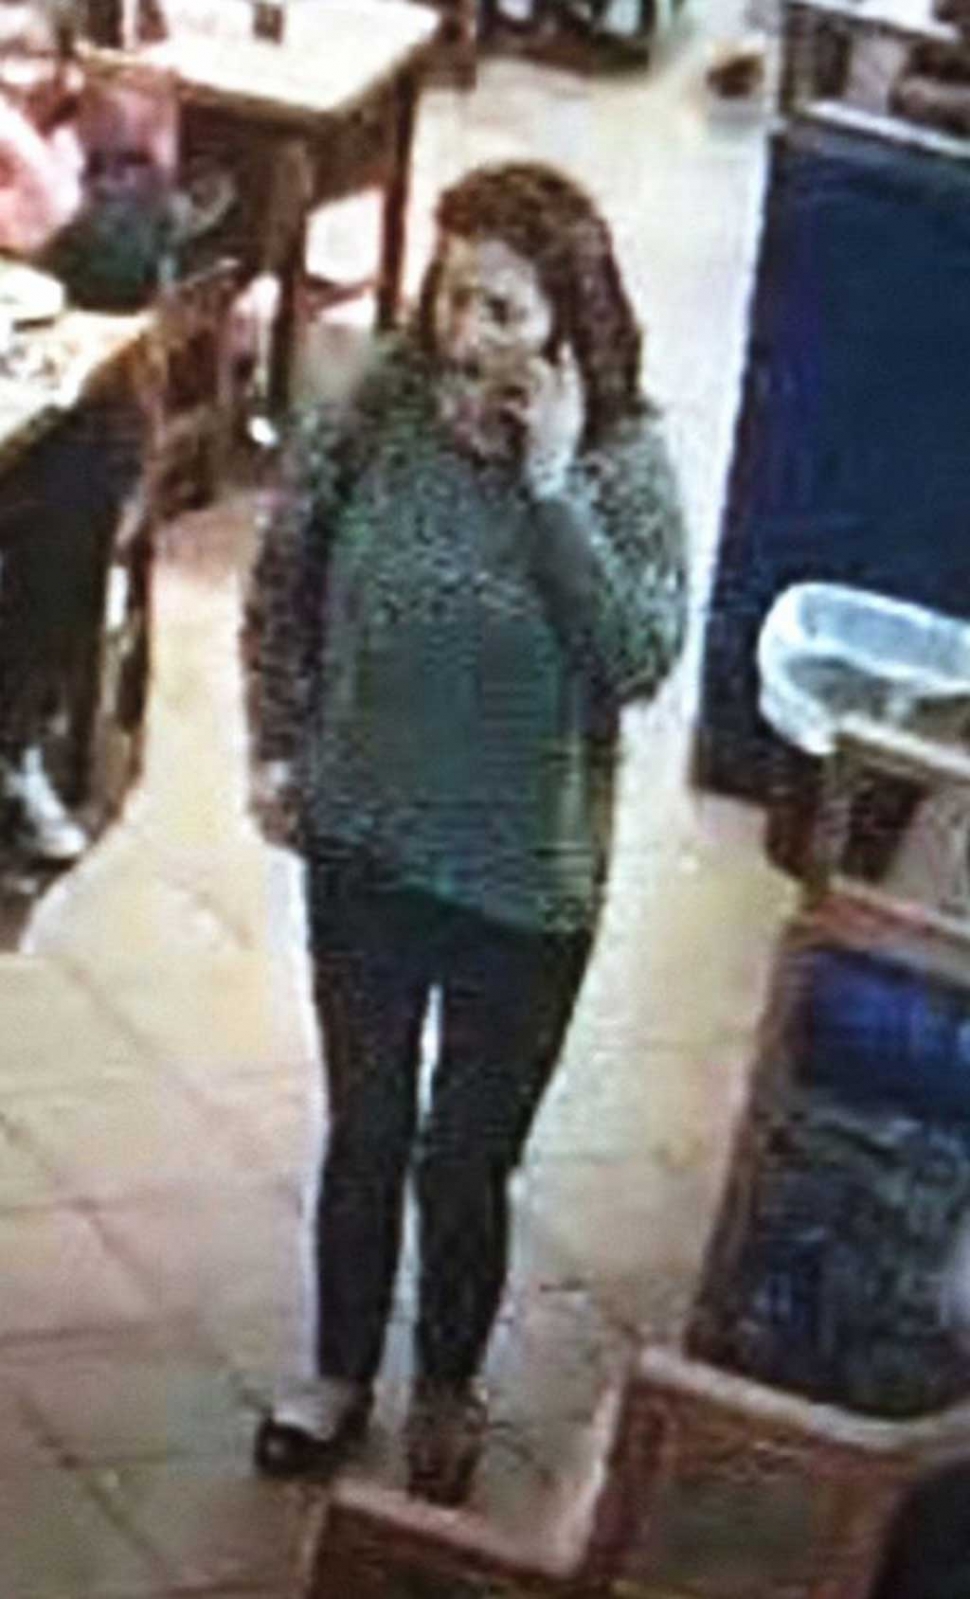 Suspect 2 - Hispanic Female, shoulder length brown hair, 5’2” - 5’5”, 130 – 150 lbs 40's